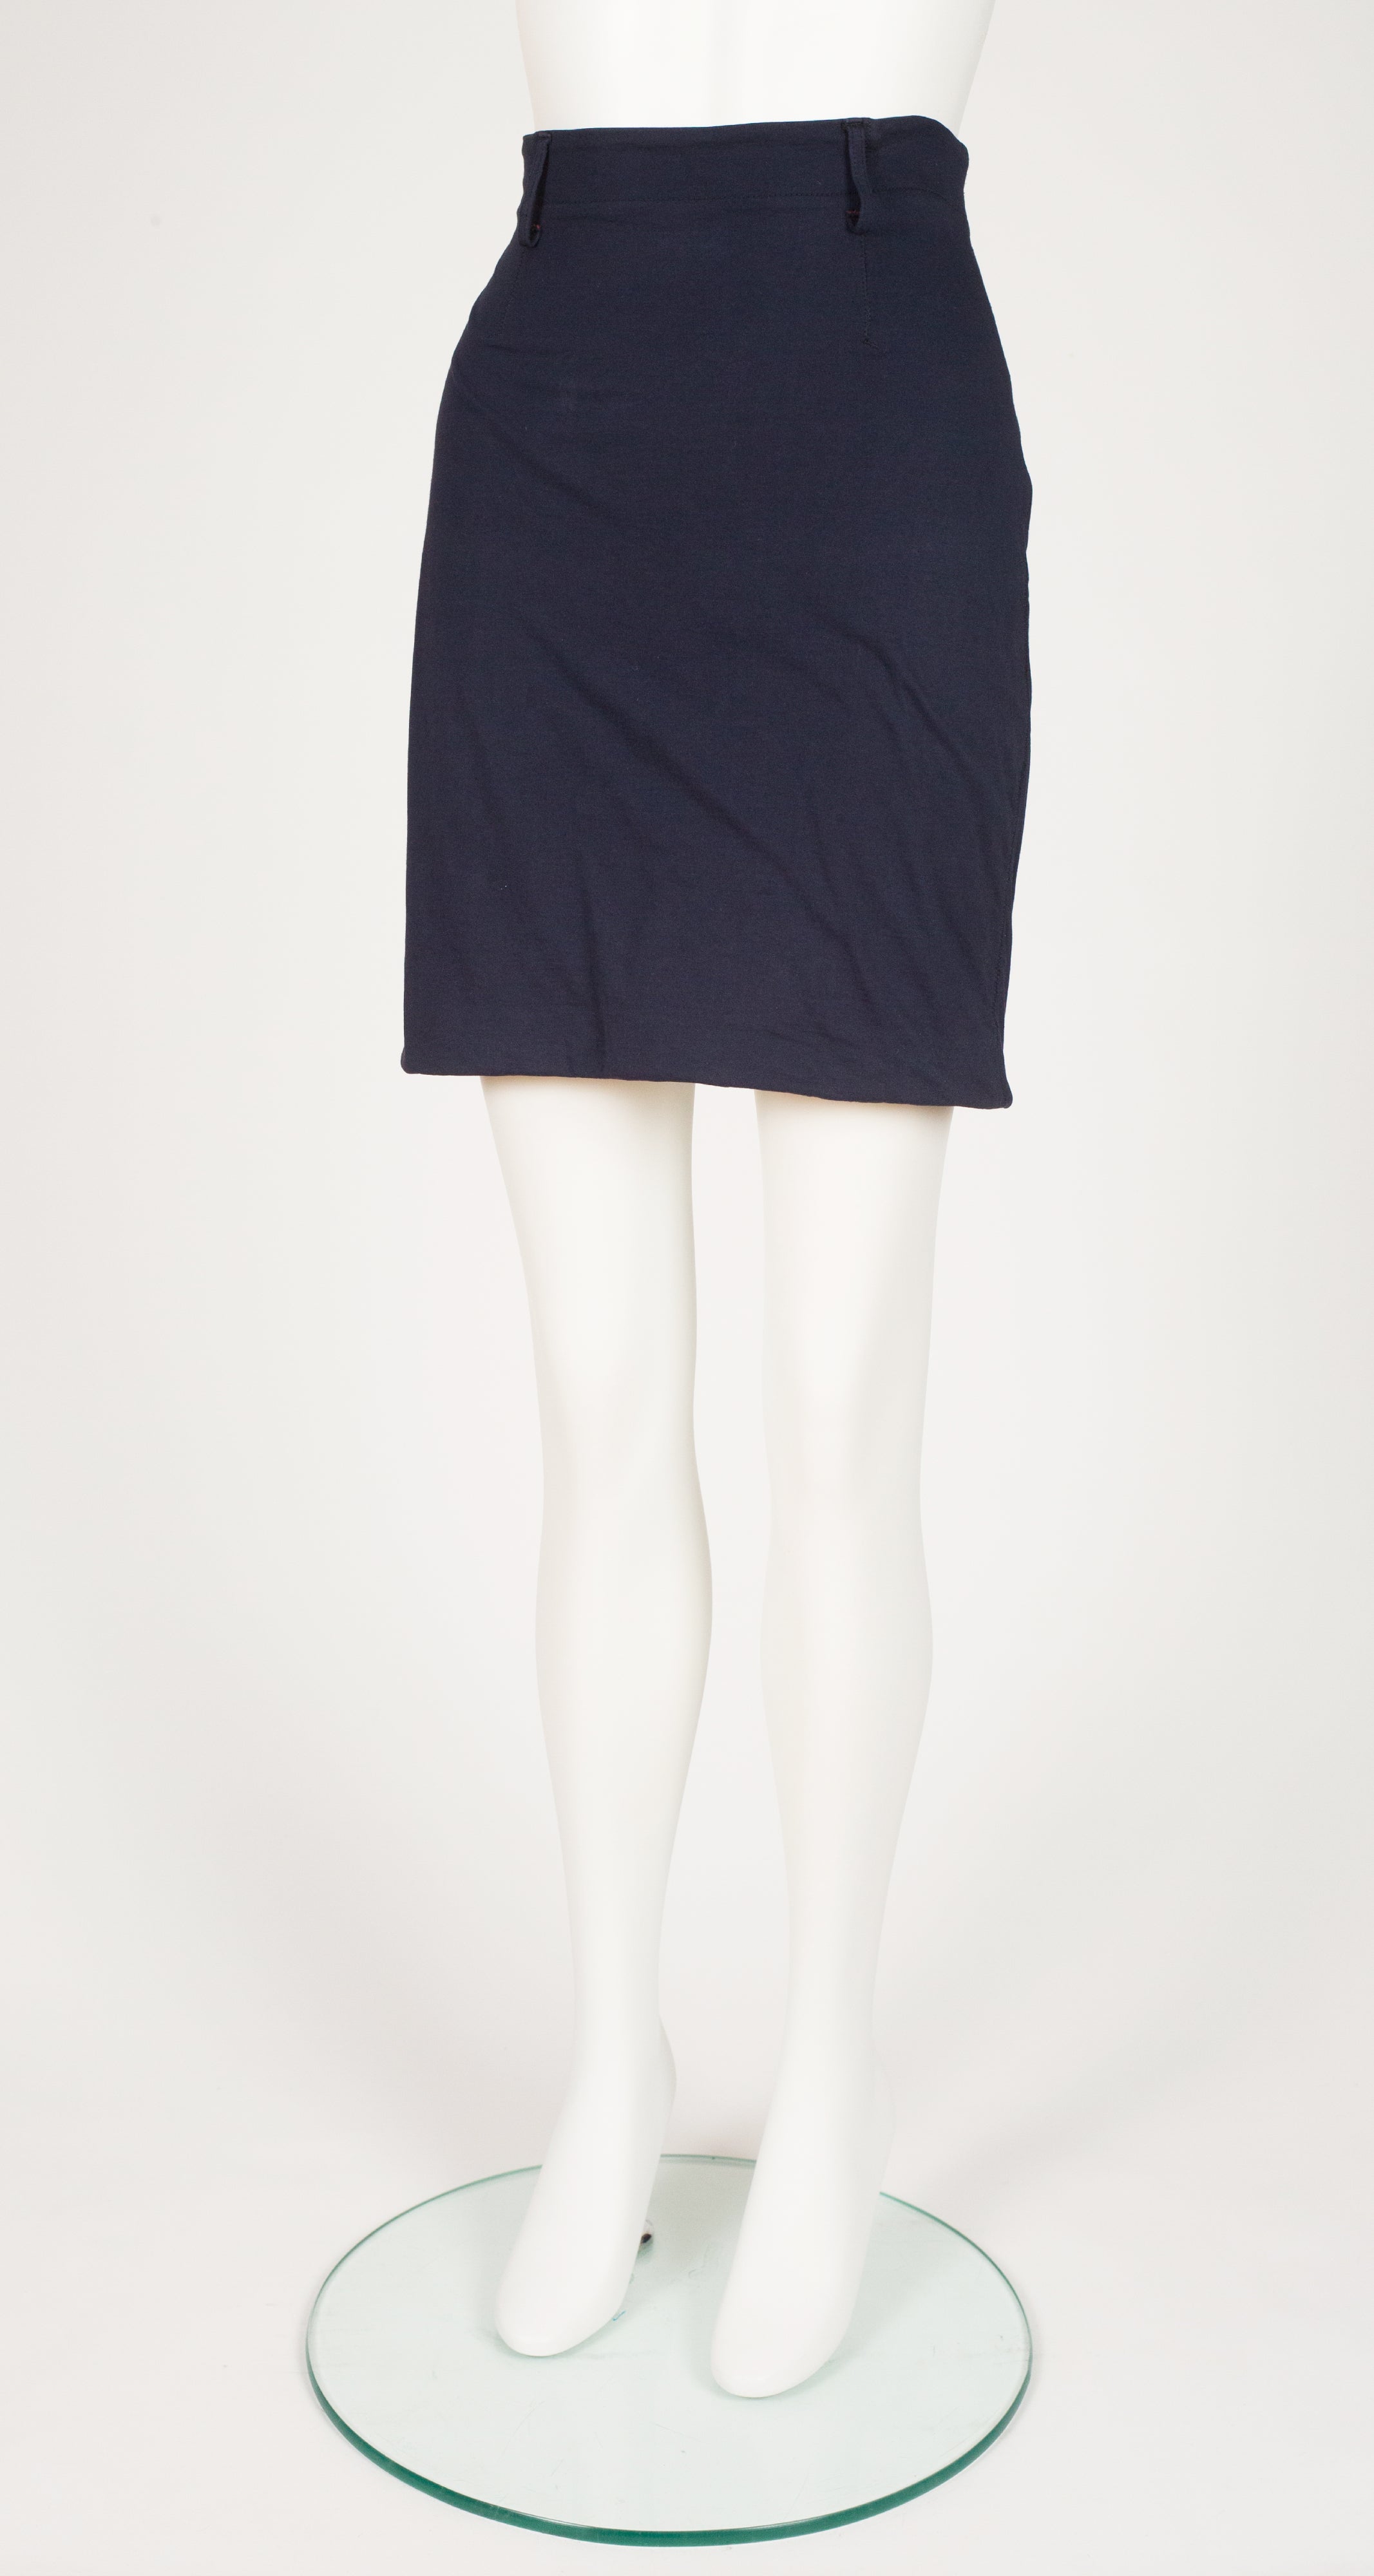 1980s Fur Collar Navy Cotton Jersey Skirt Suit